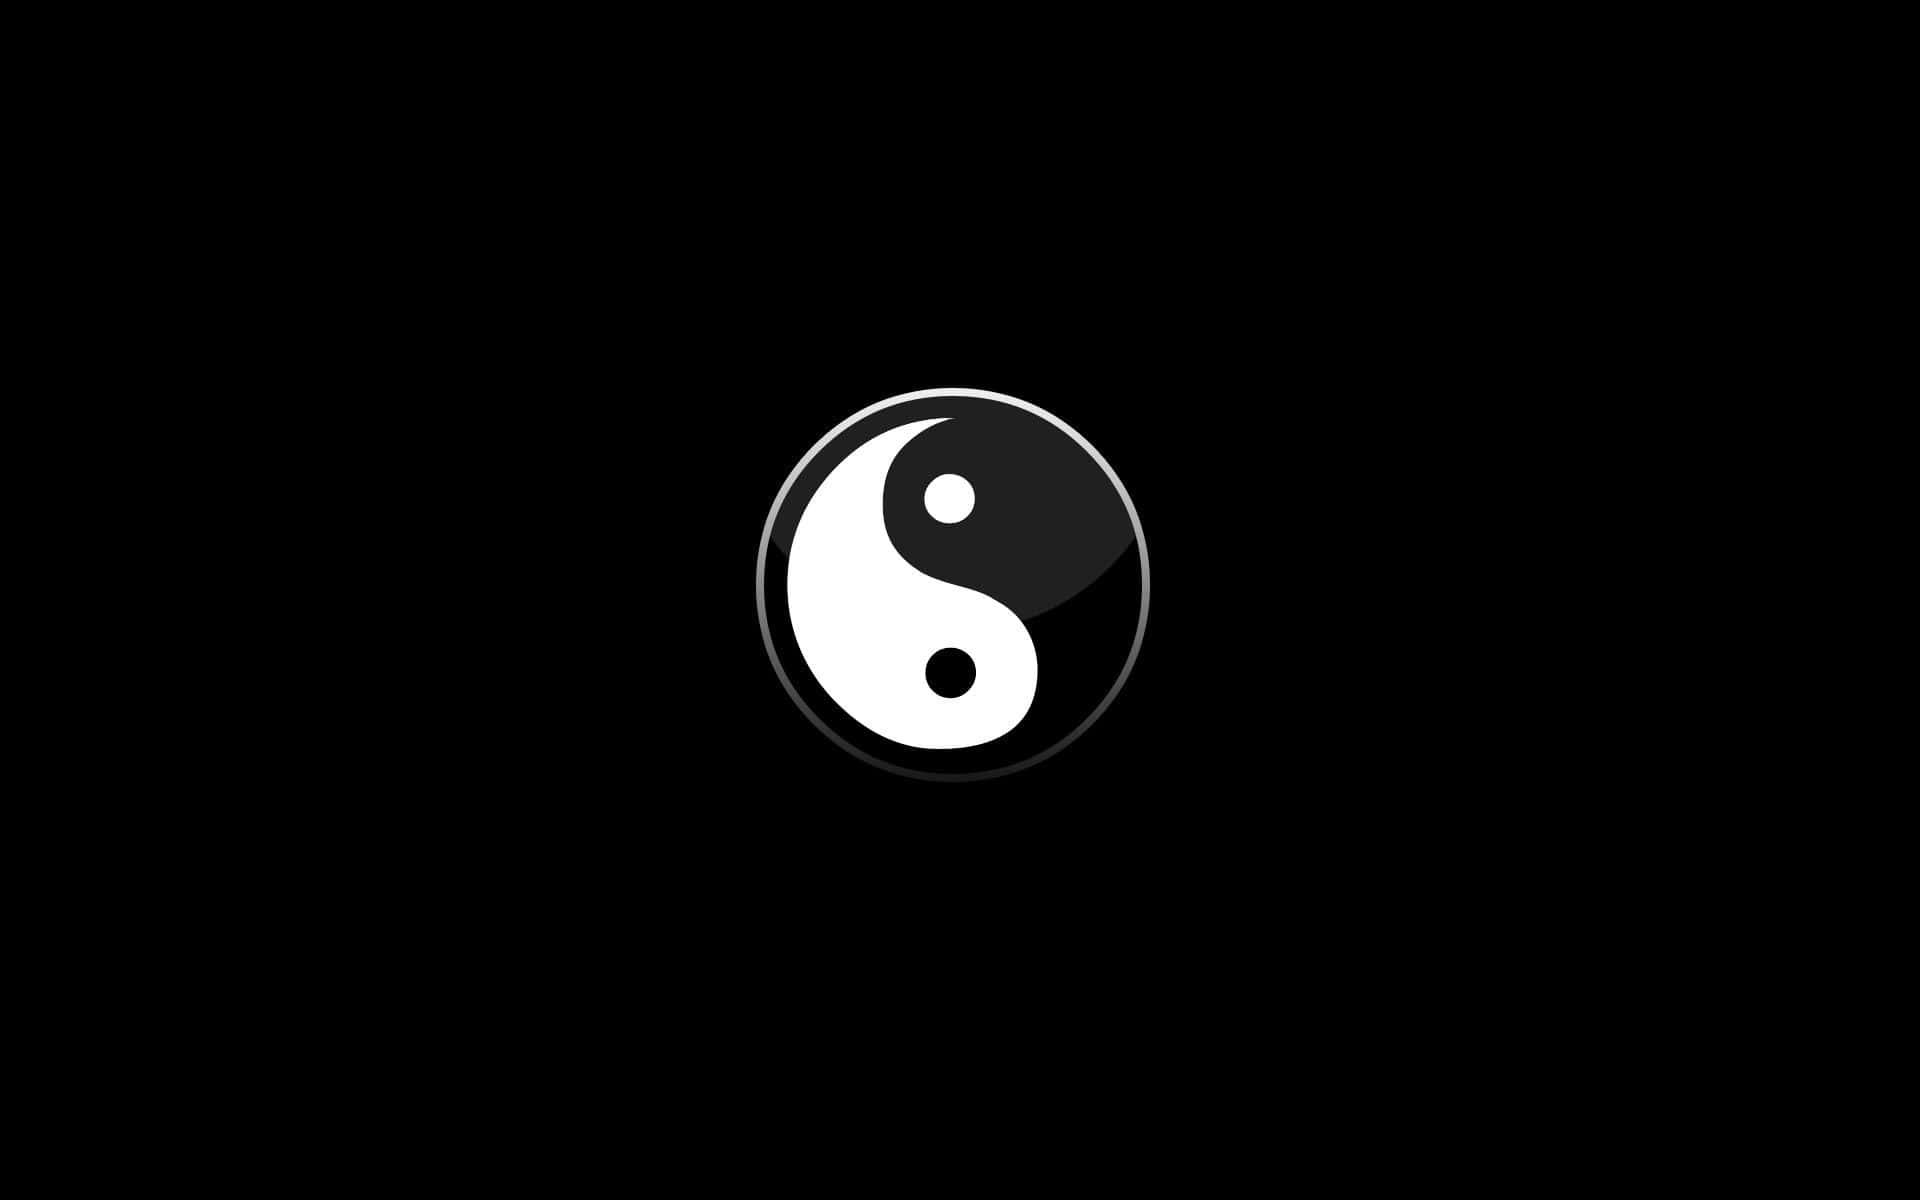 Simple Black And White Yin Yang Emblem 4k